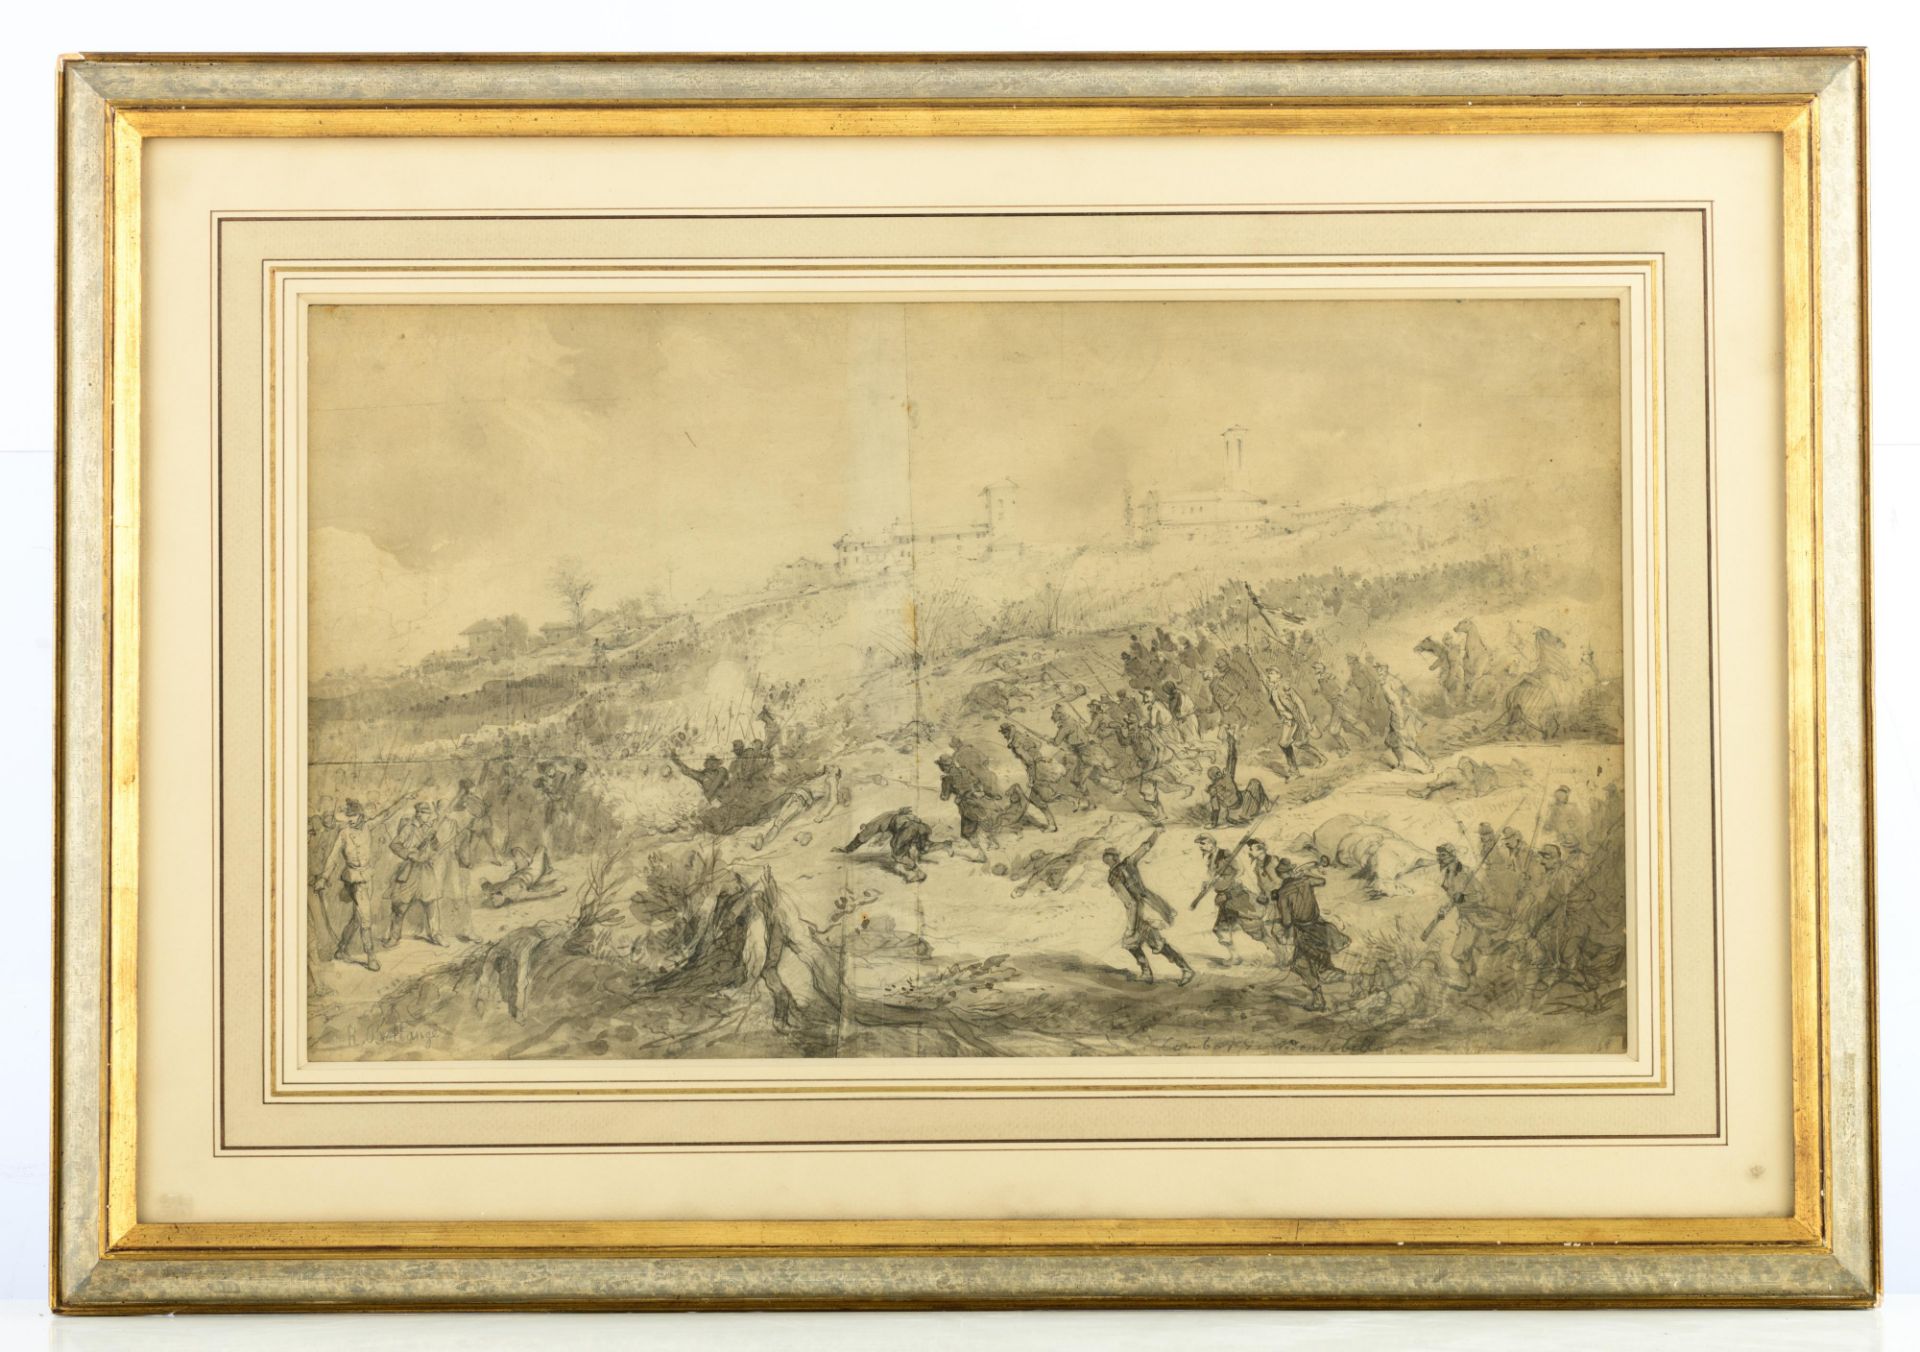 Bellang‚ A., 'Combat de Montebello', pencil and ink on paper, 30 x 52 cm - Image 2 of 7